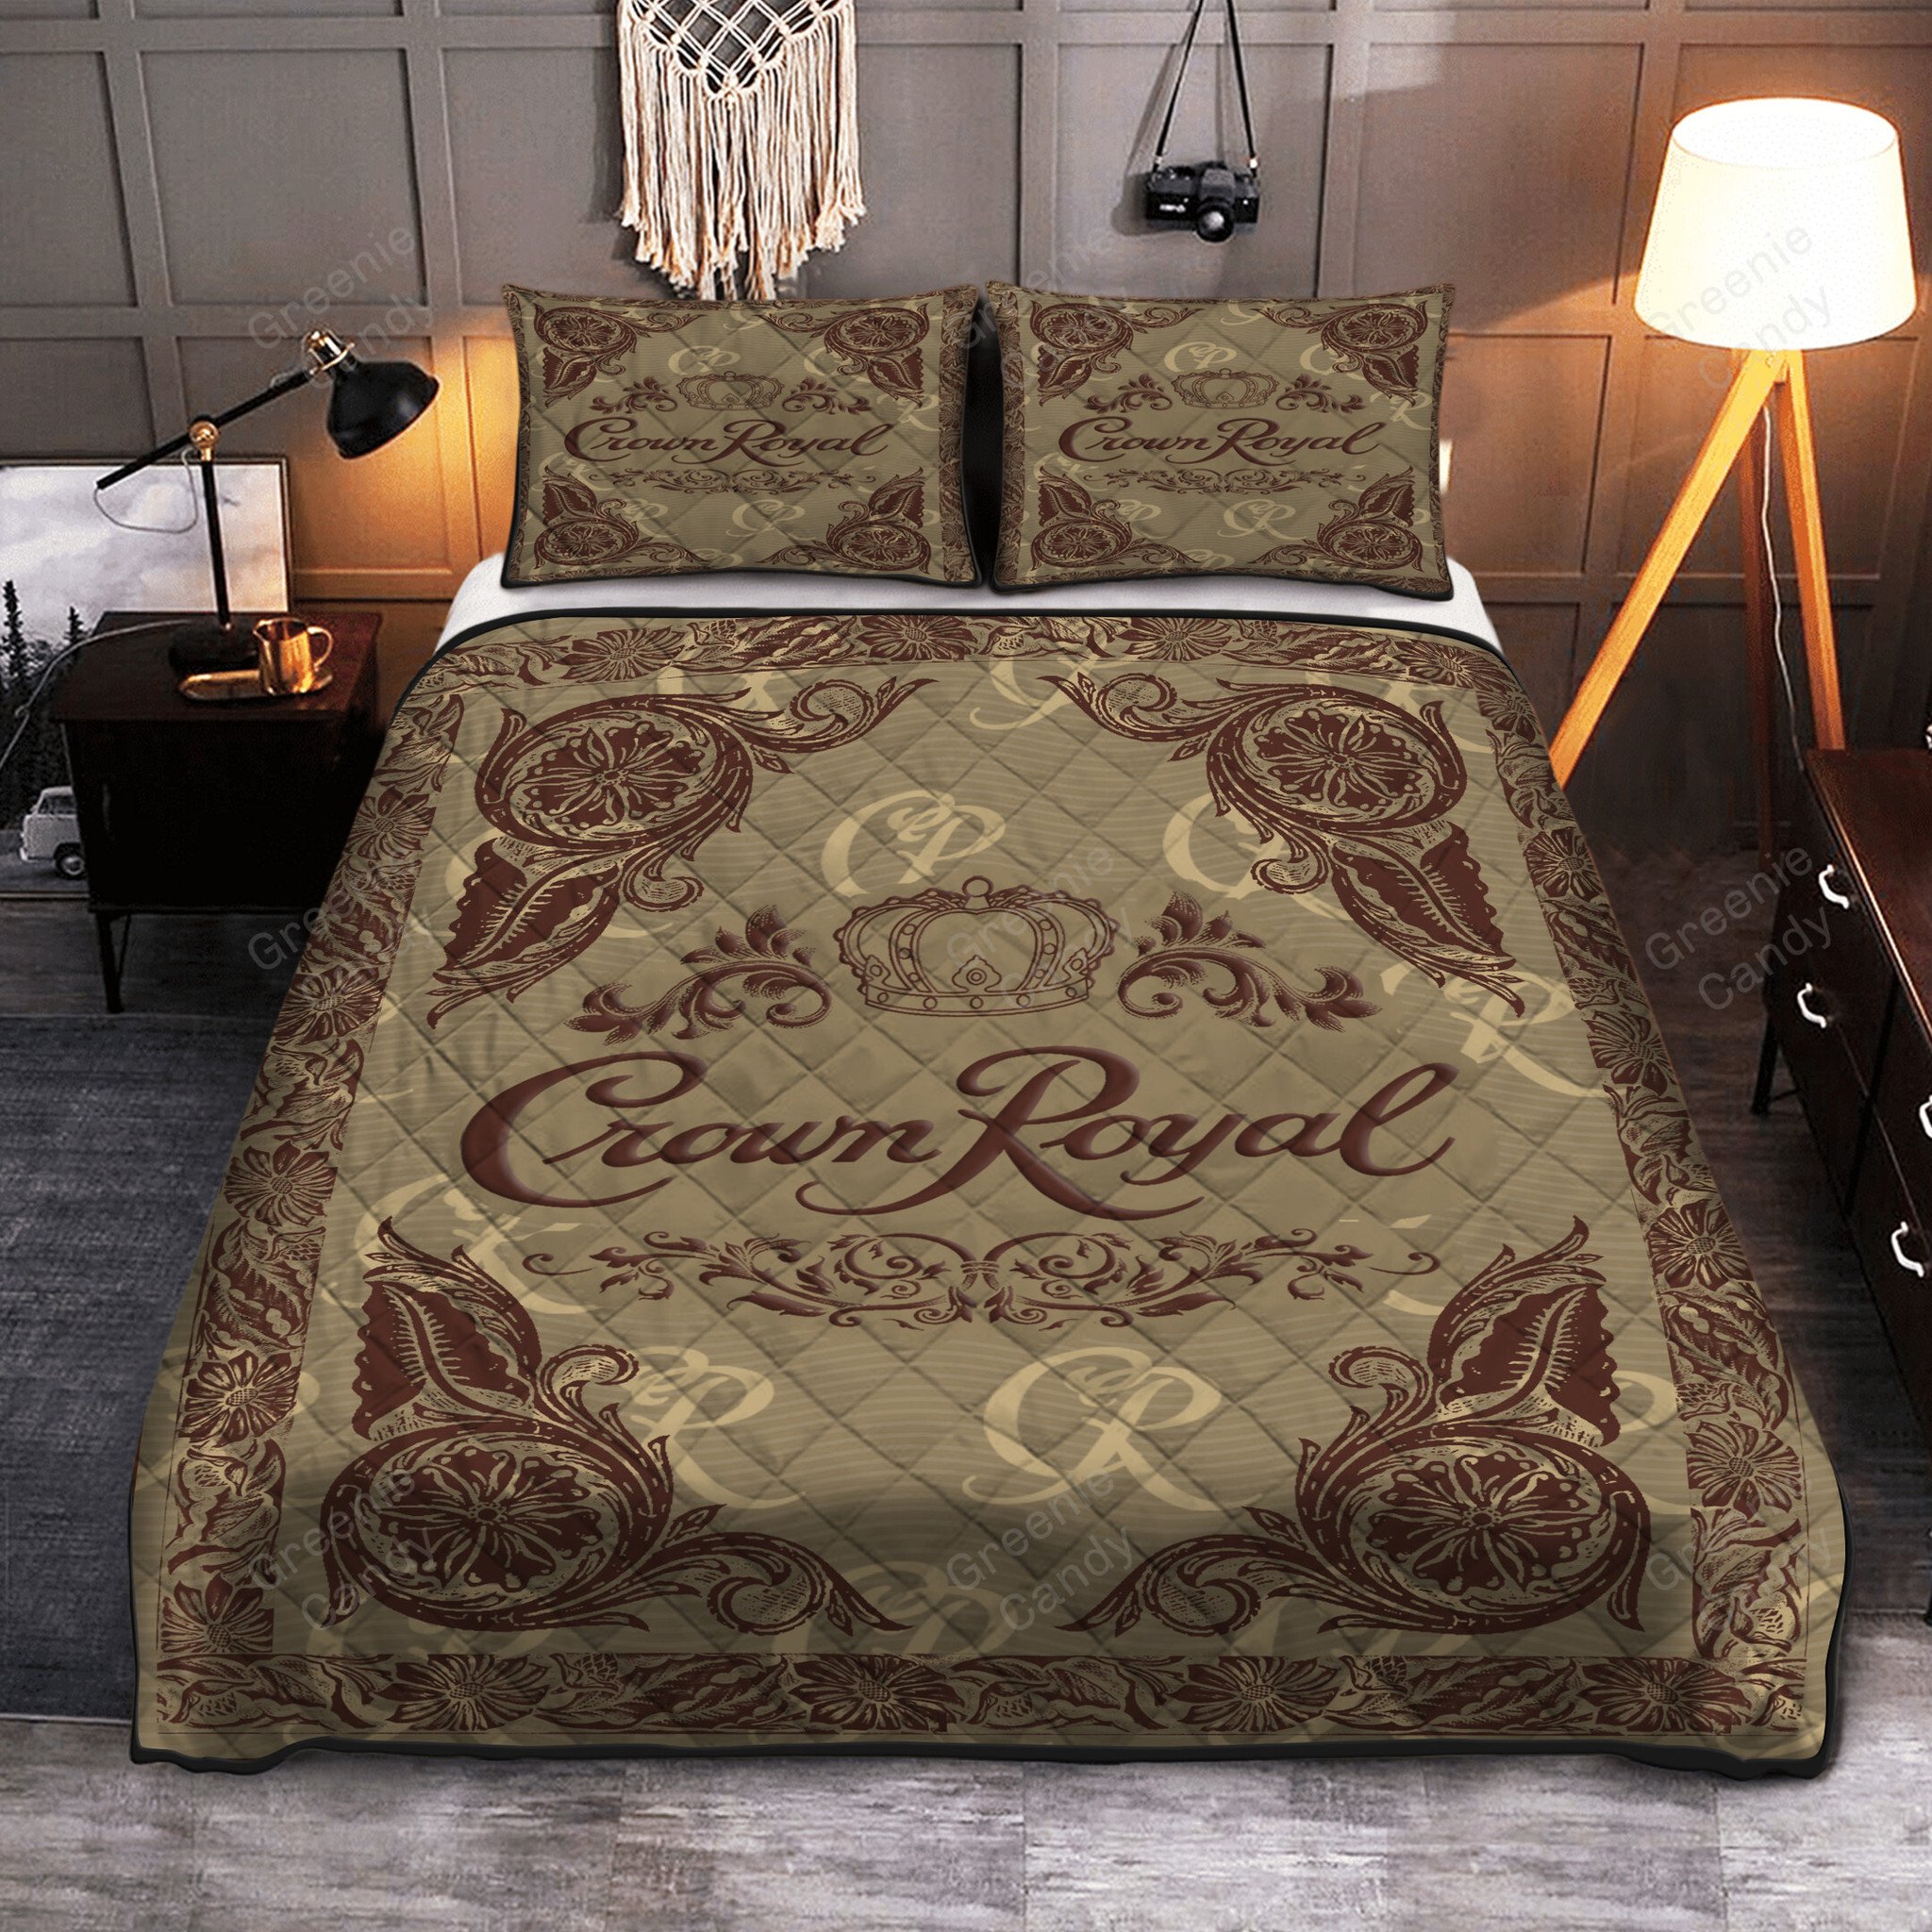 NEW Crown Royal Vanilla Whiskey Bedding Set 1